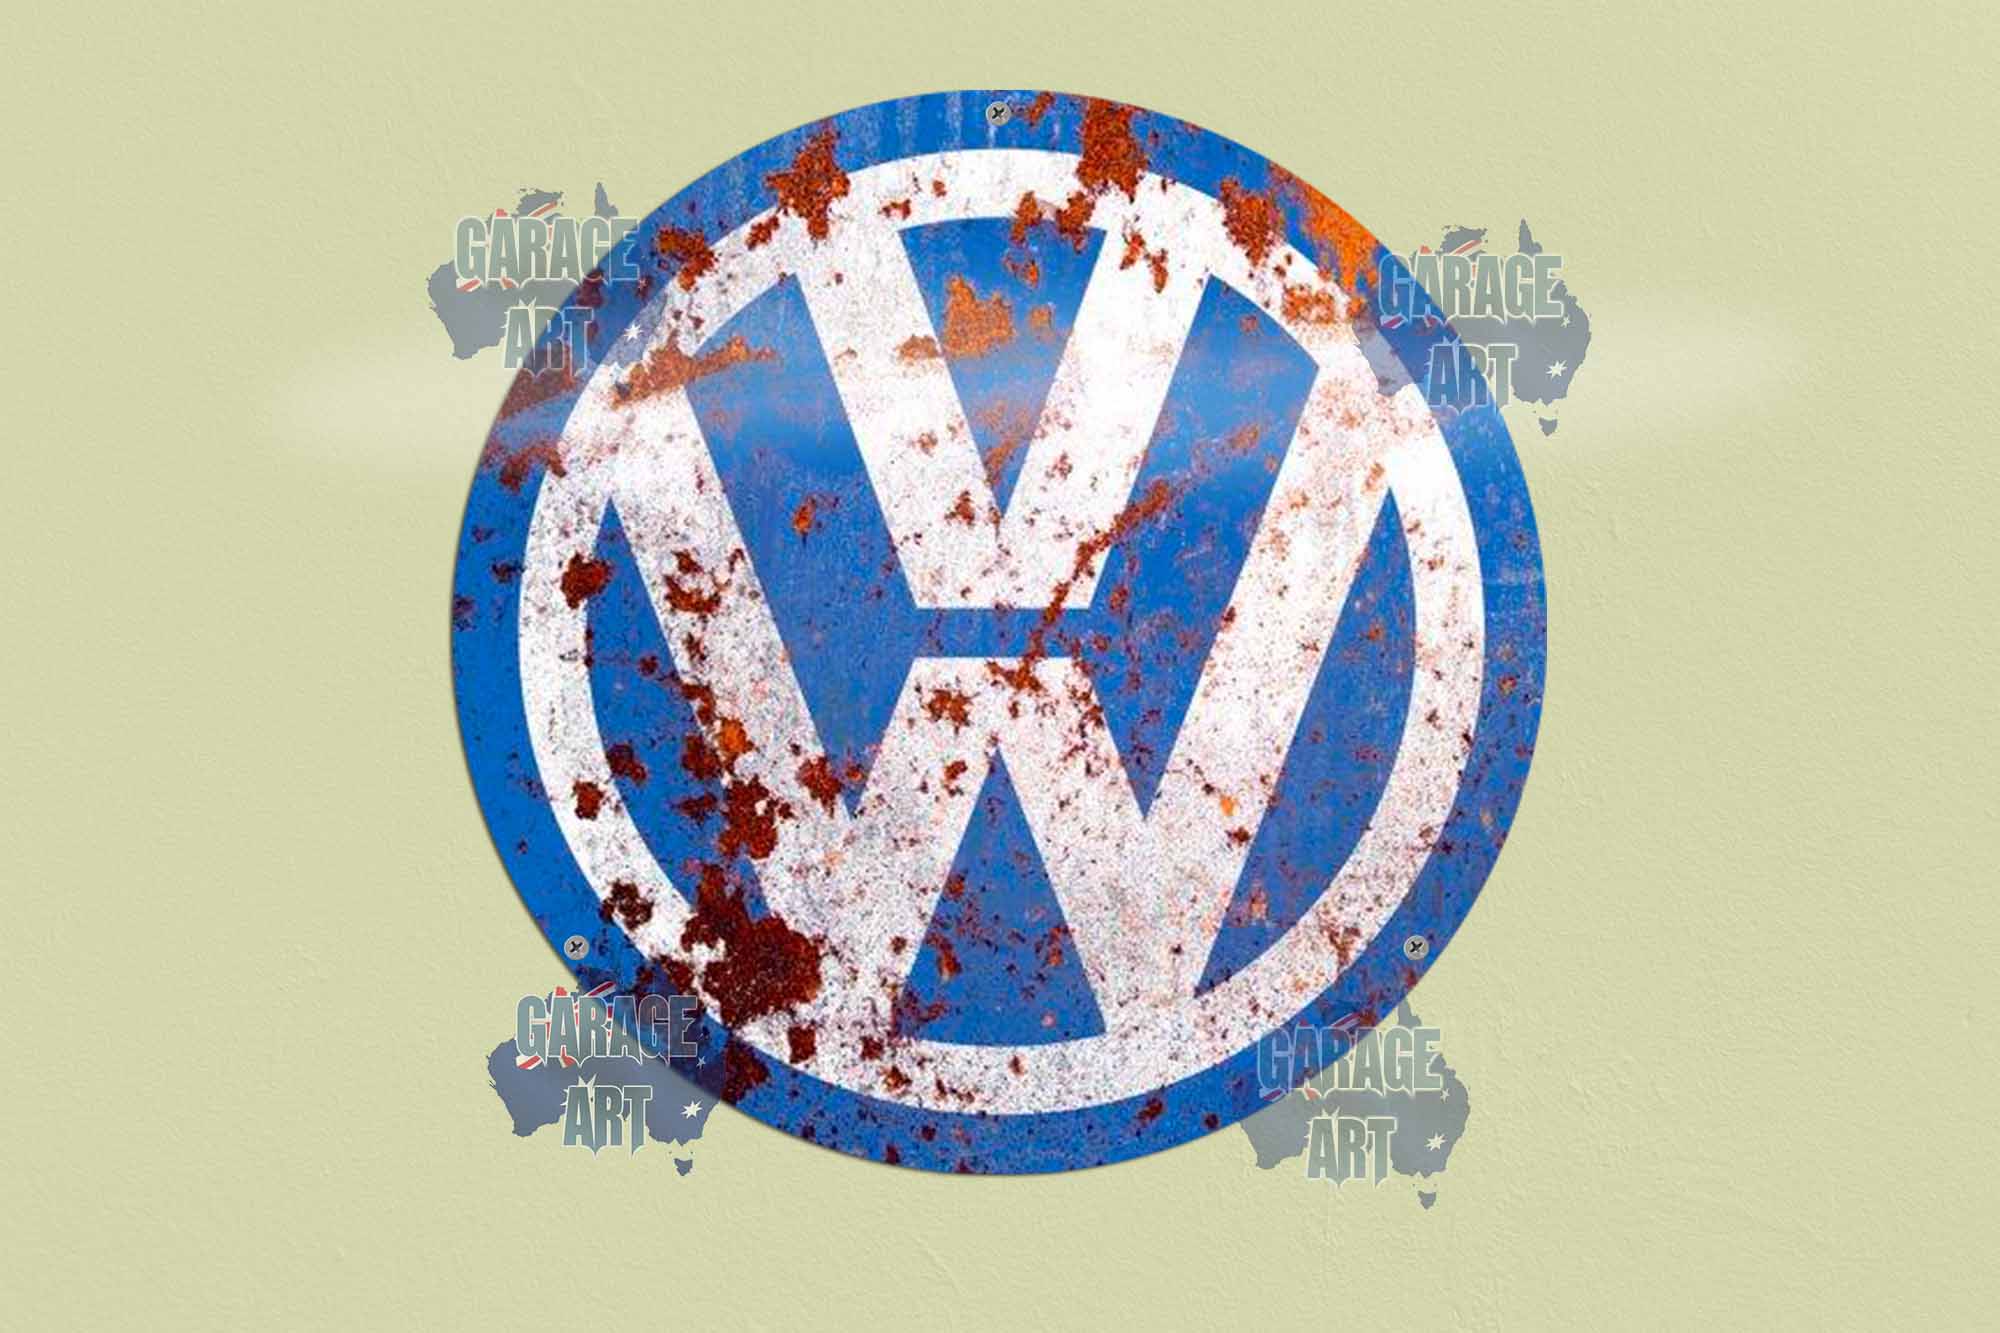 Volkswagen Logo Rusty 355mmDia Tin Sign freeshipping - garageartaustralia